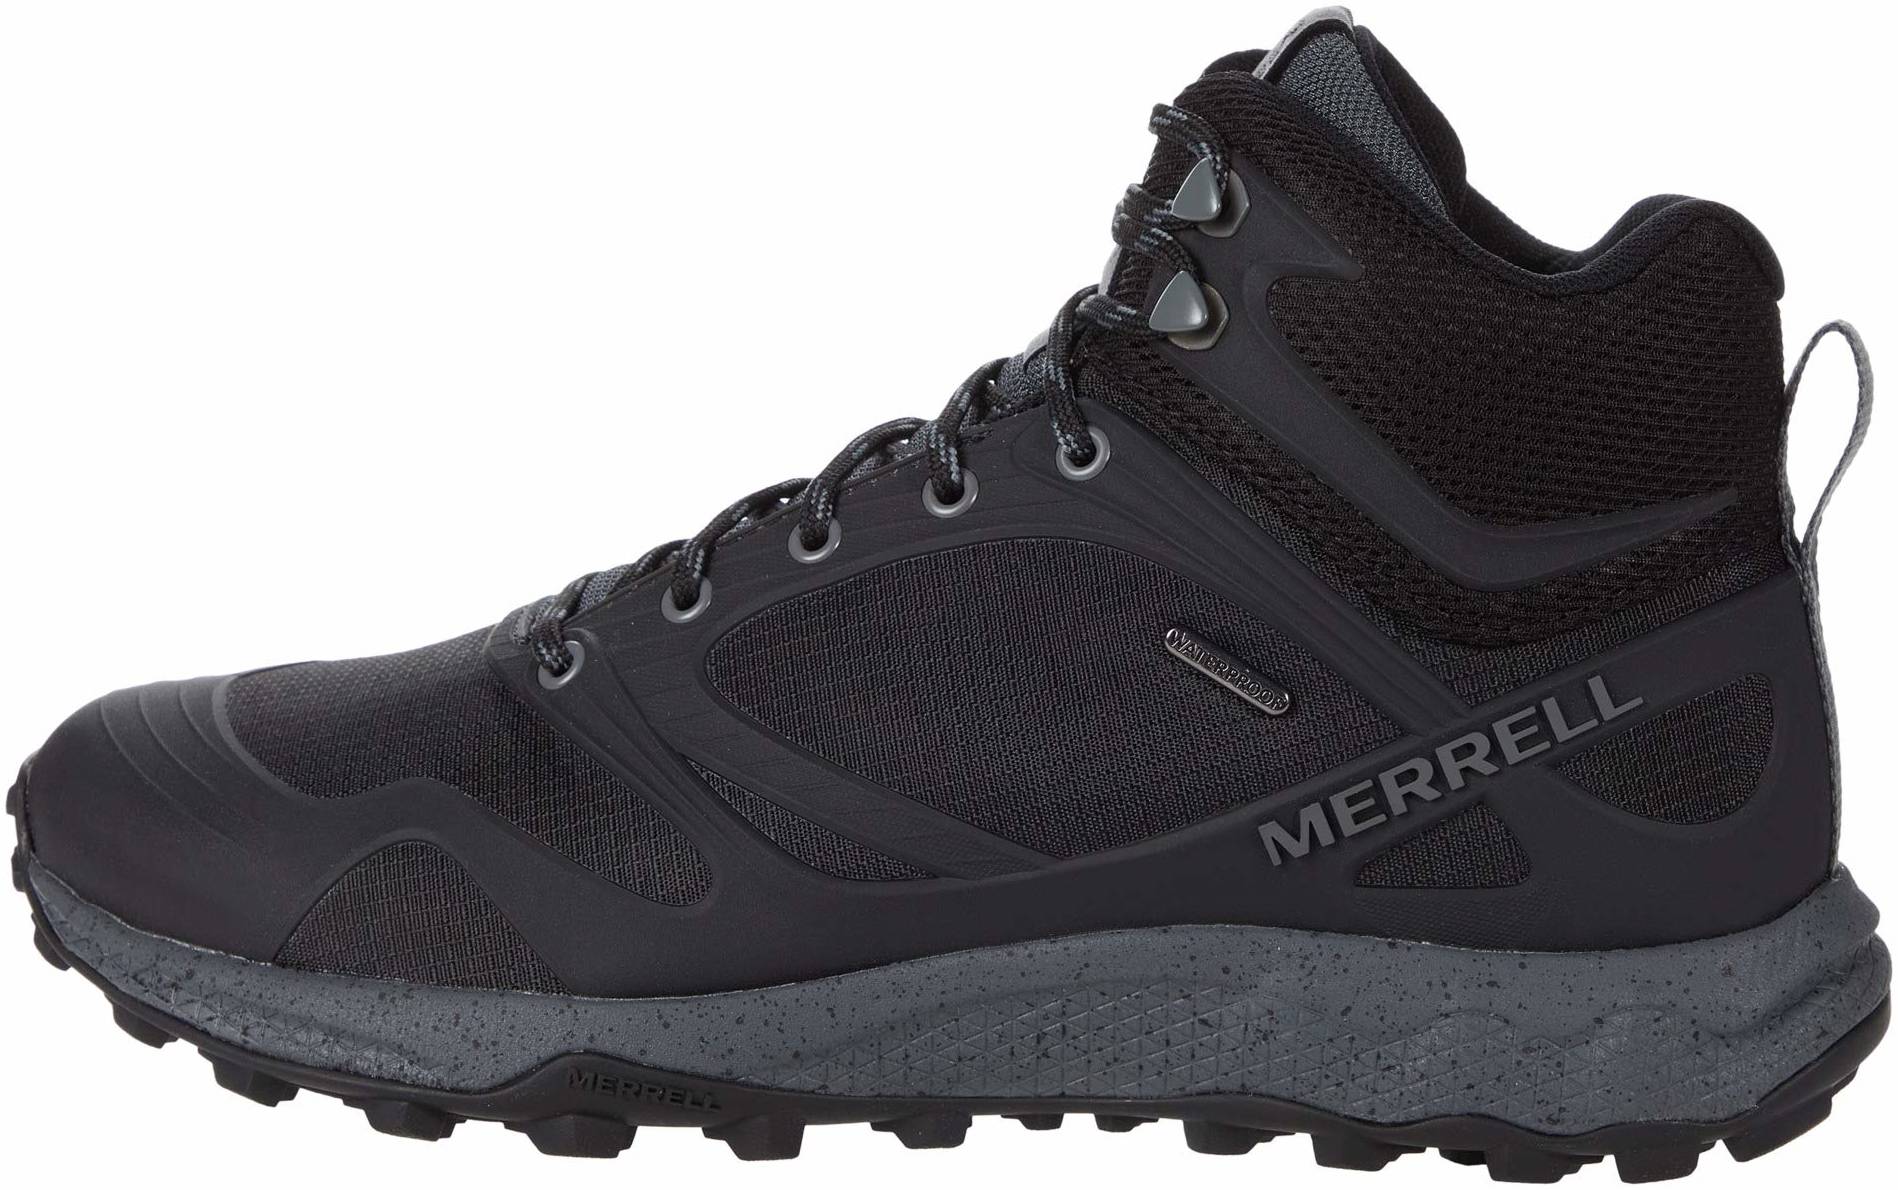 Merrell Mens Altalight Mid Waterproof Walking Boots Grey Sports Outdoors 